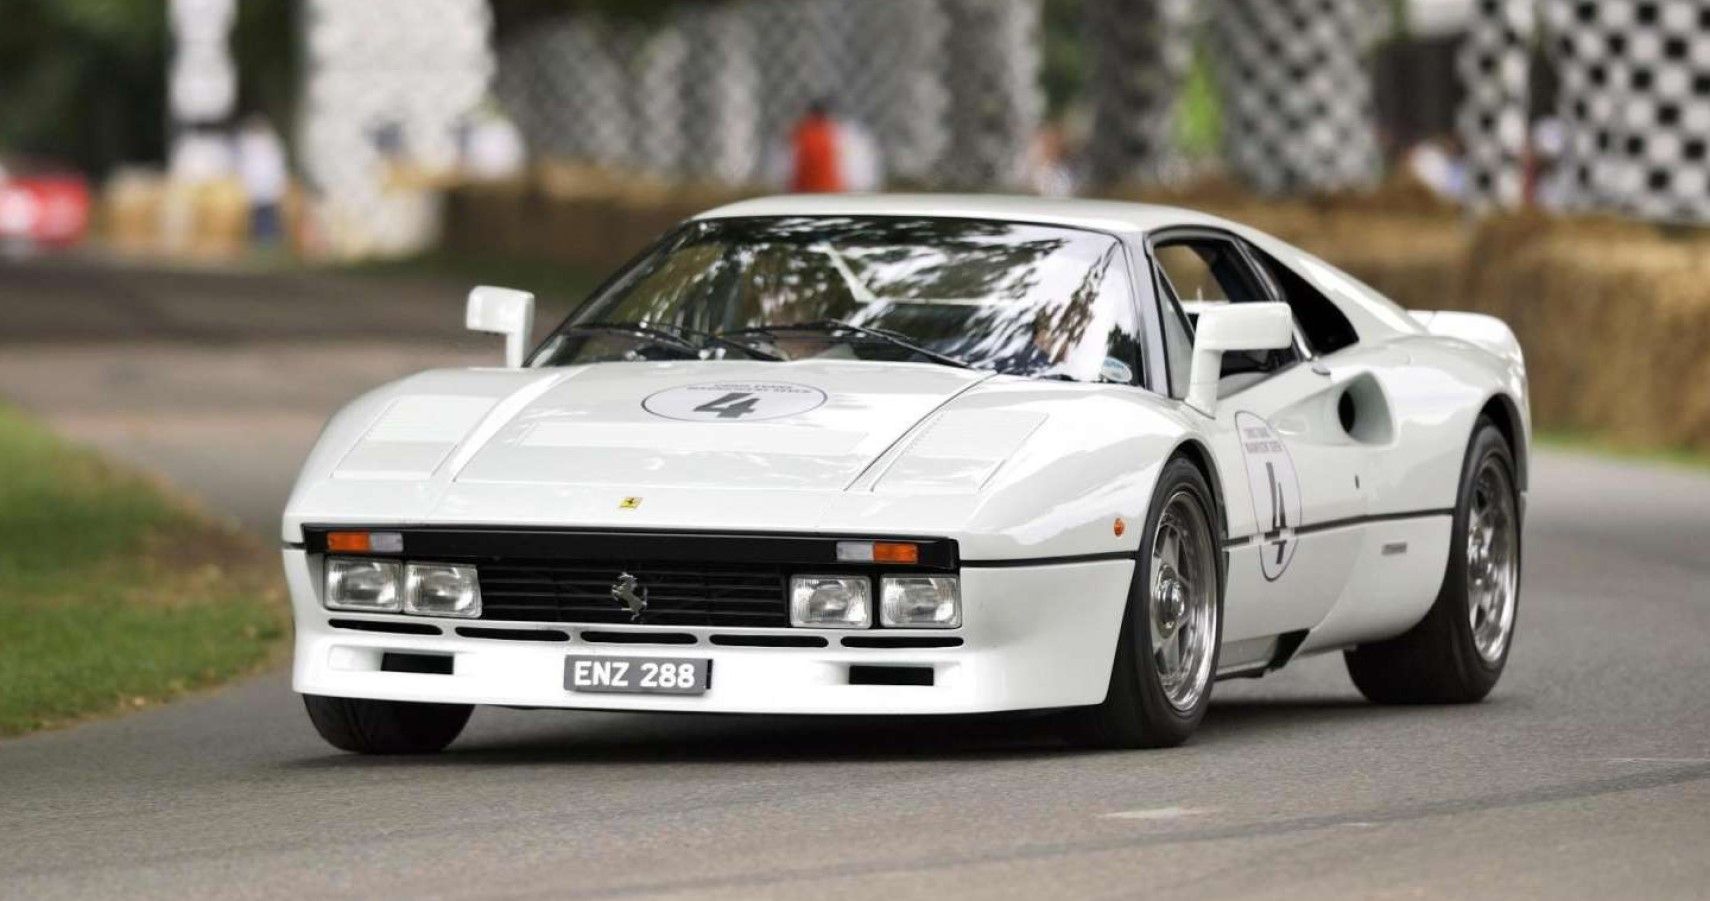 1985 Ferrari 288 GTO at the Goodwood festival of speed